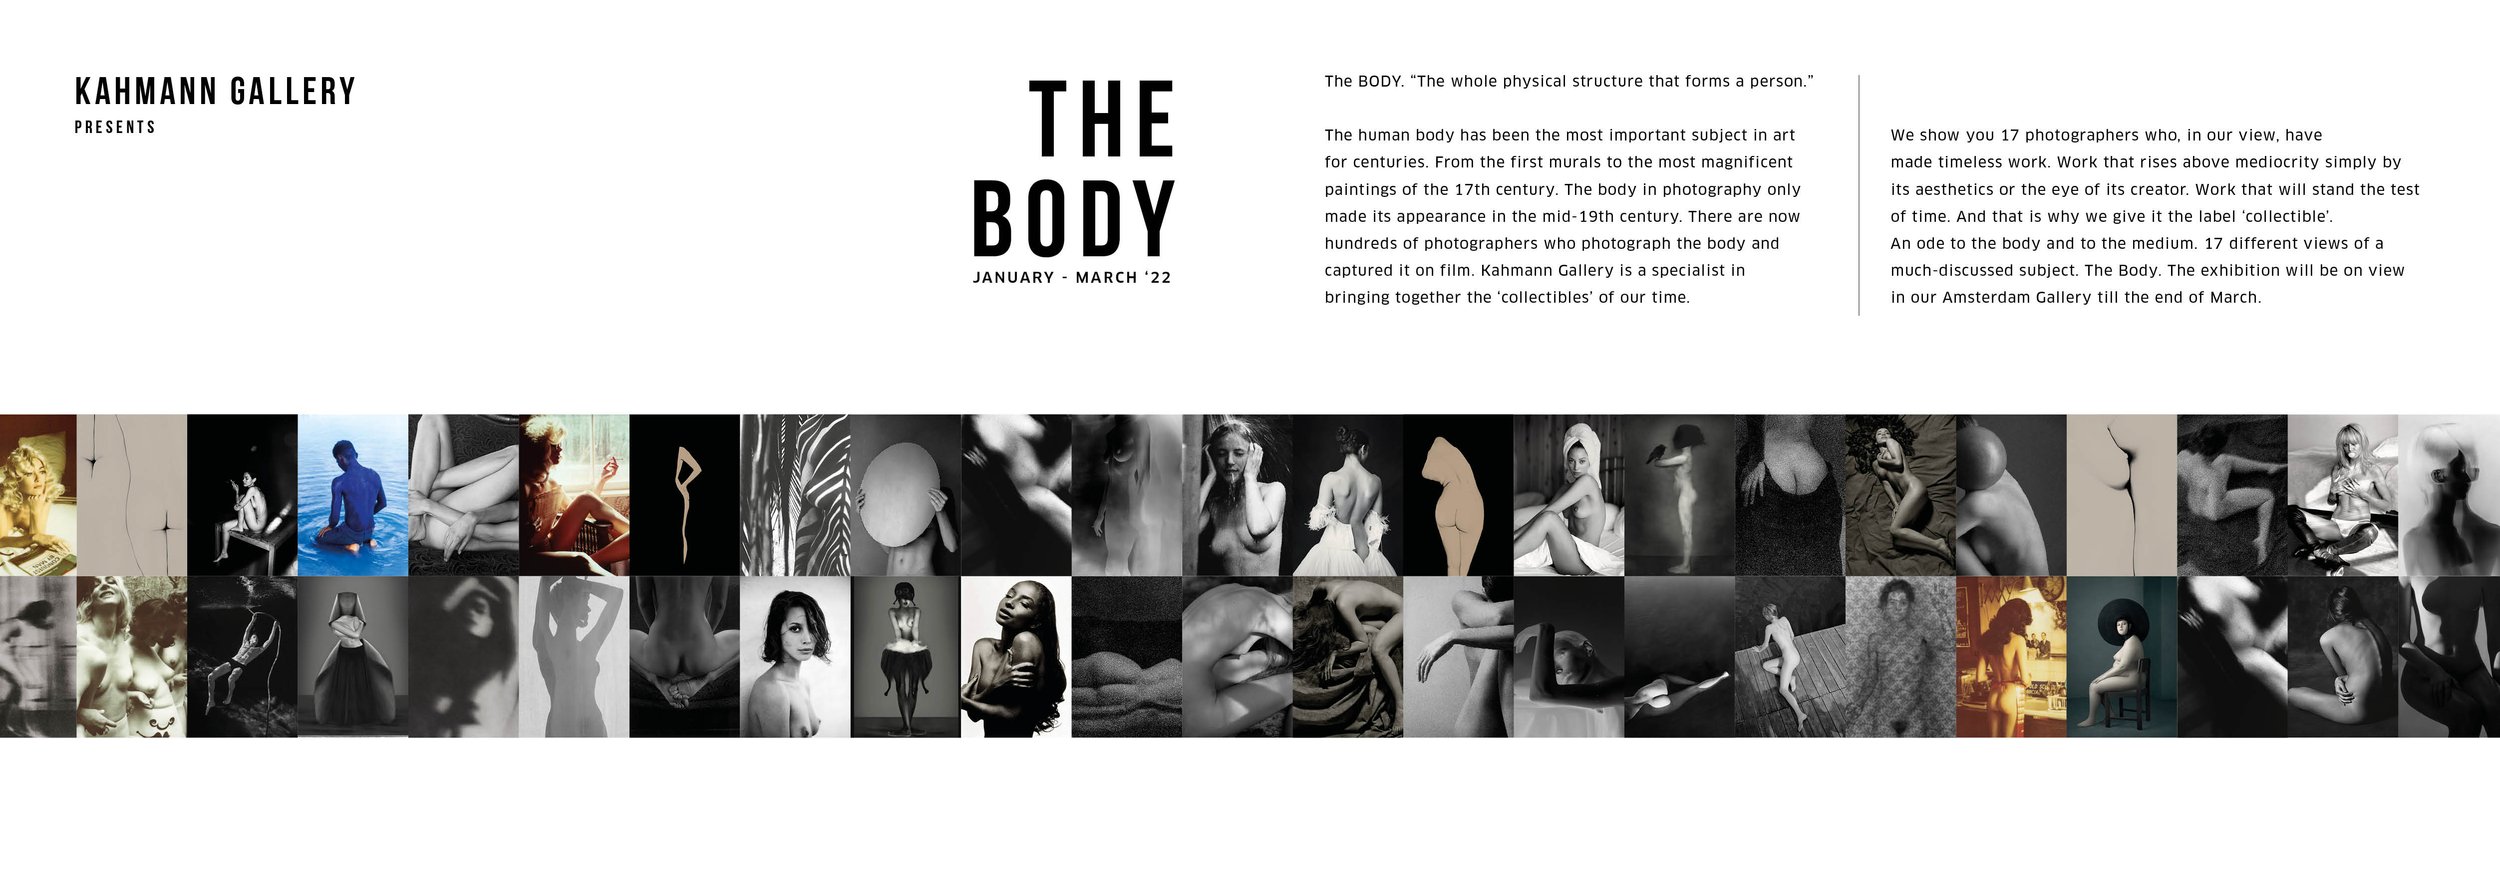 KG Catalogue The Body (11 jan)2.jpg